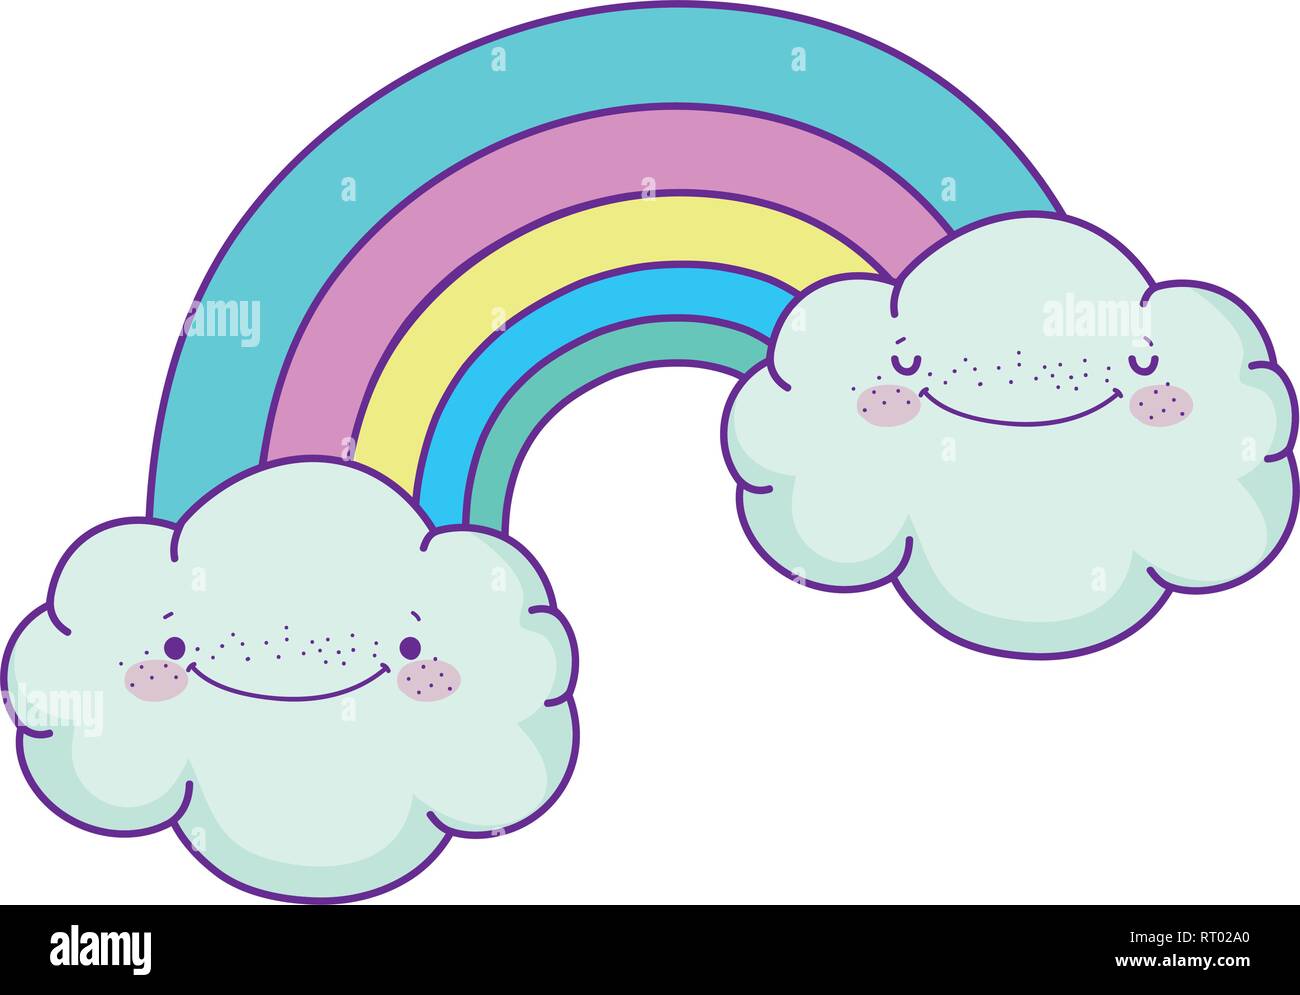 Featured image of post Rainbow Arcoiris Kawaii Va acompa ado de una capa m gica del arcoiris